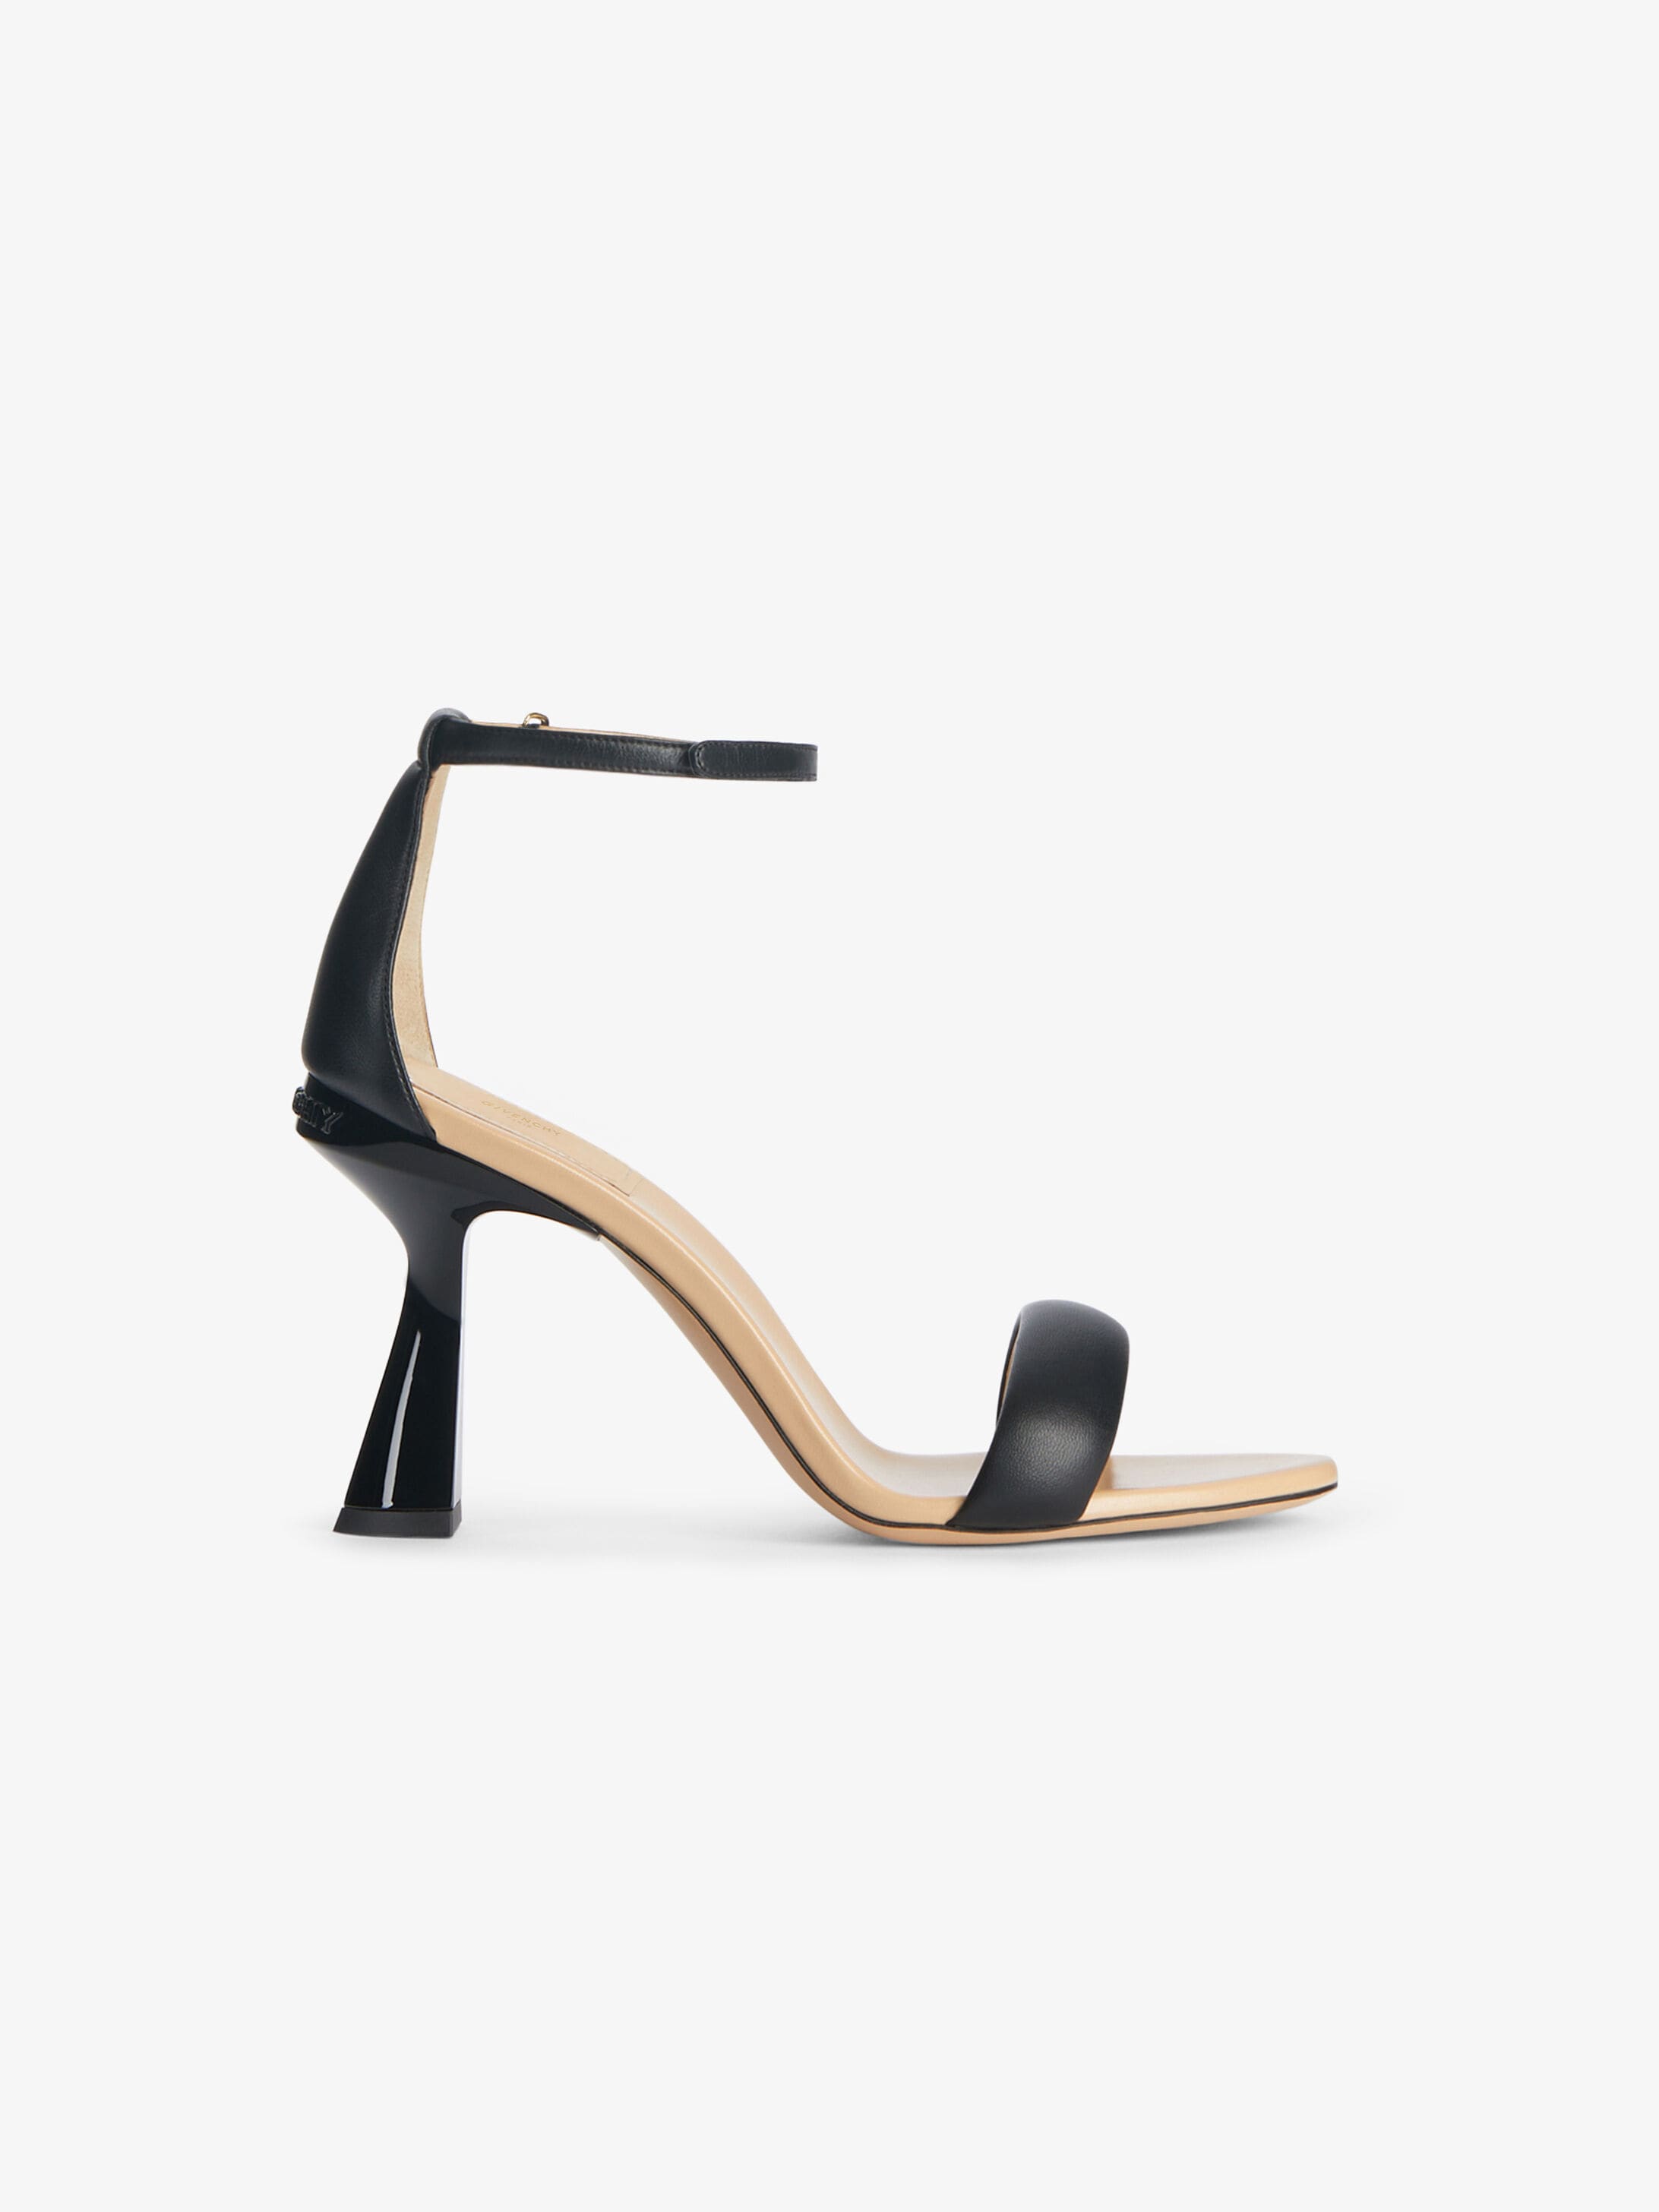 Carène sandals in leather | GIVENCHY Paris